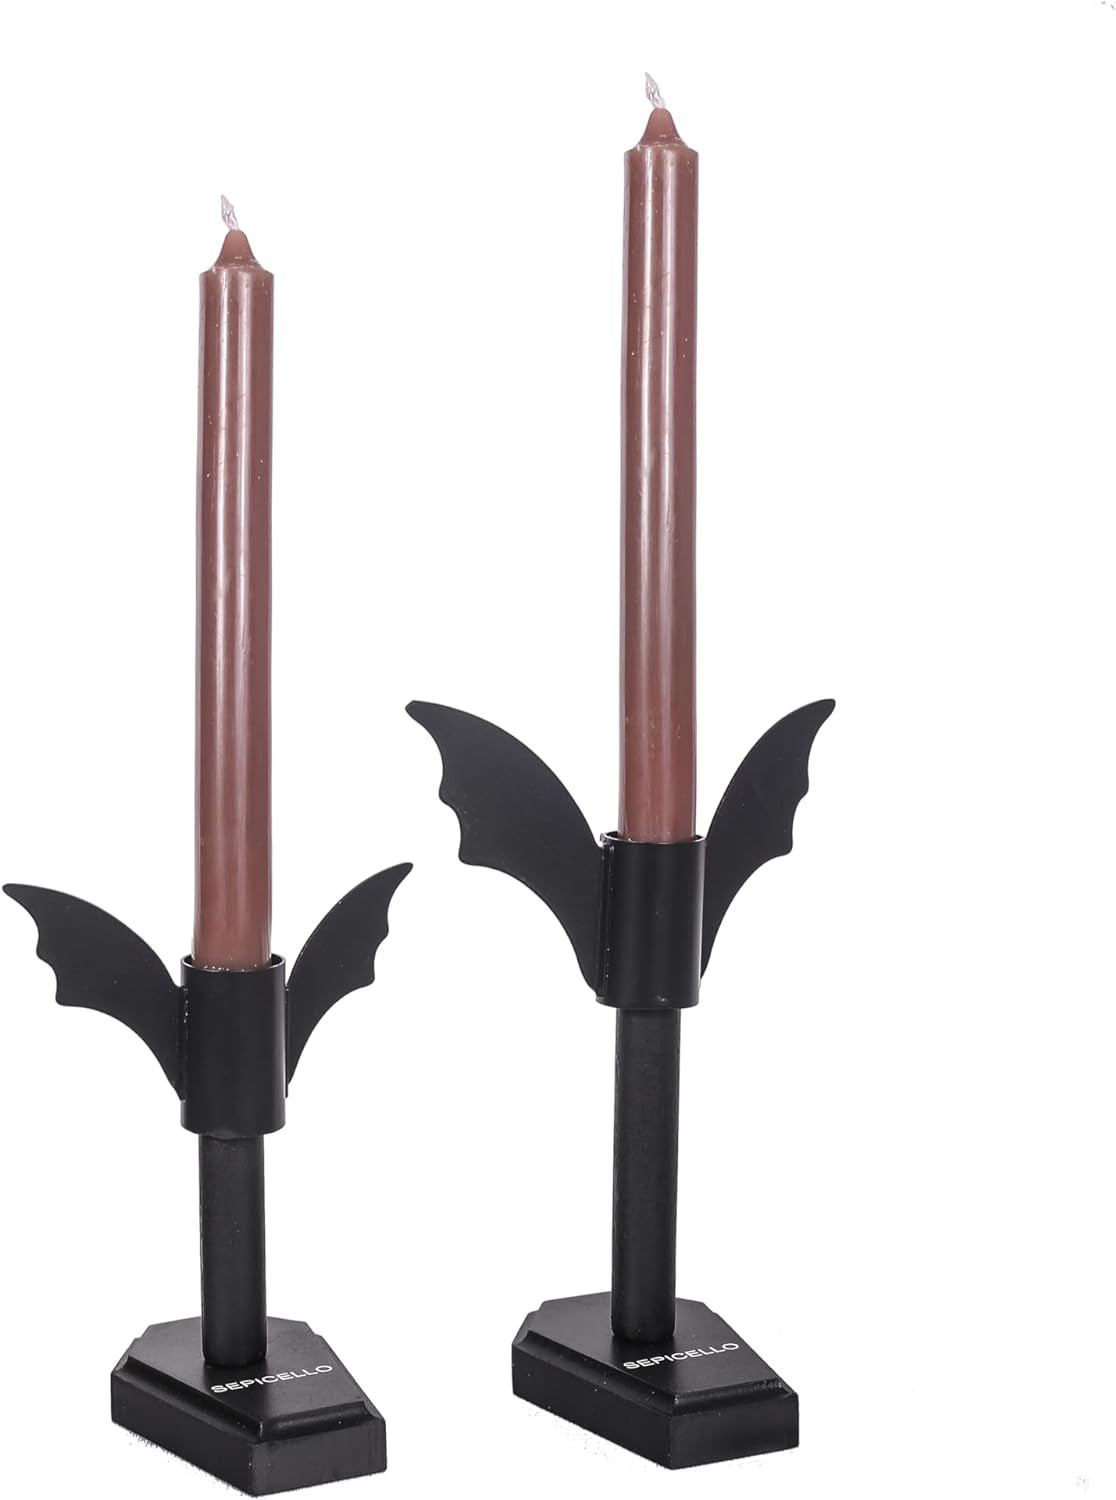 Bat Candelabra Candlestick Holders - Set of 2 Black Victorian Gothic Decor with 